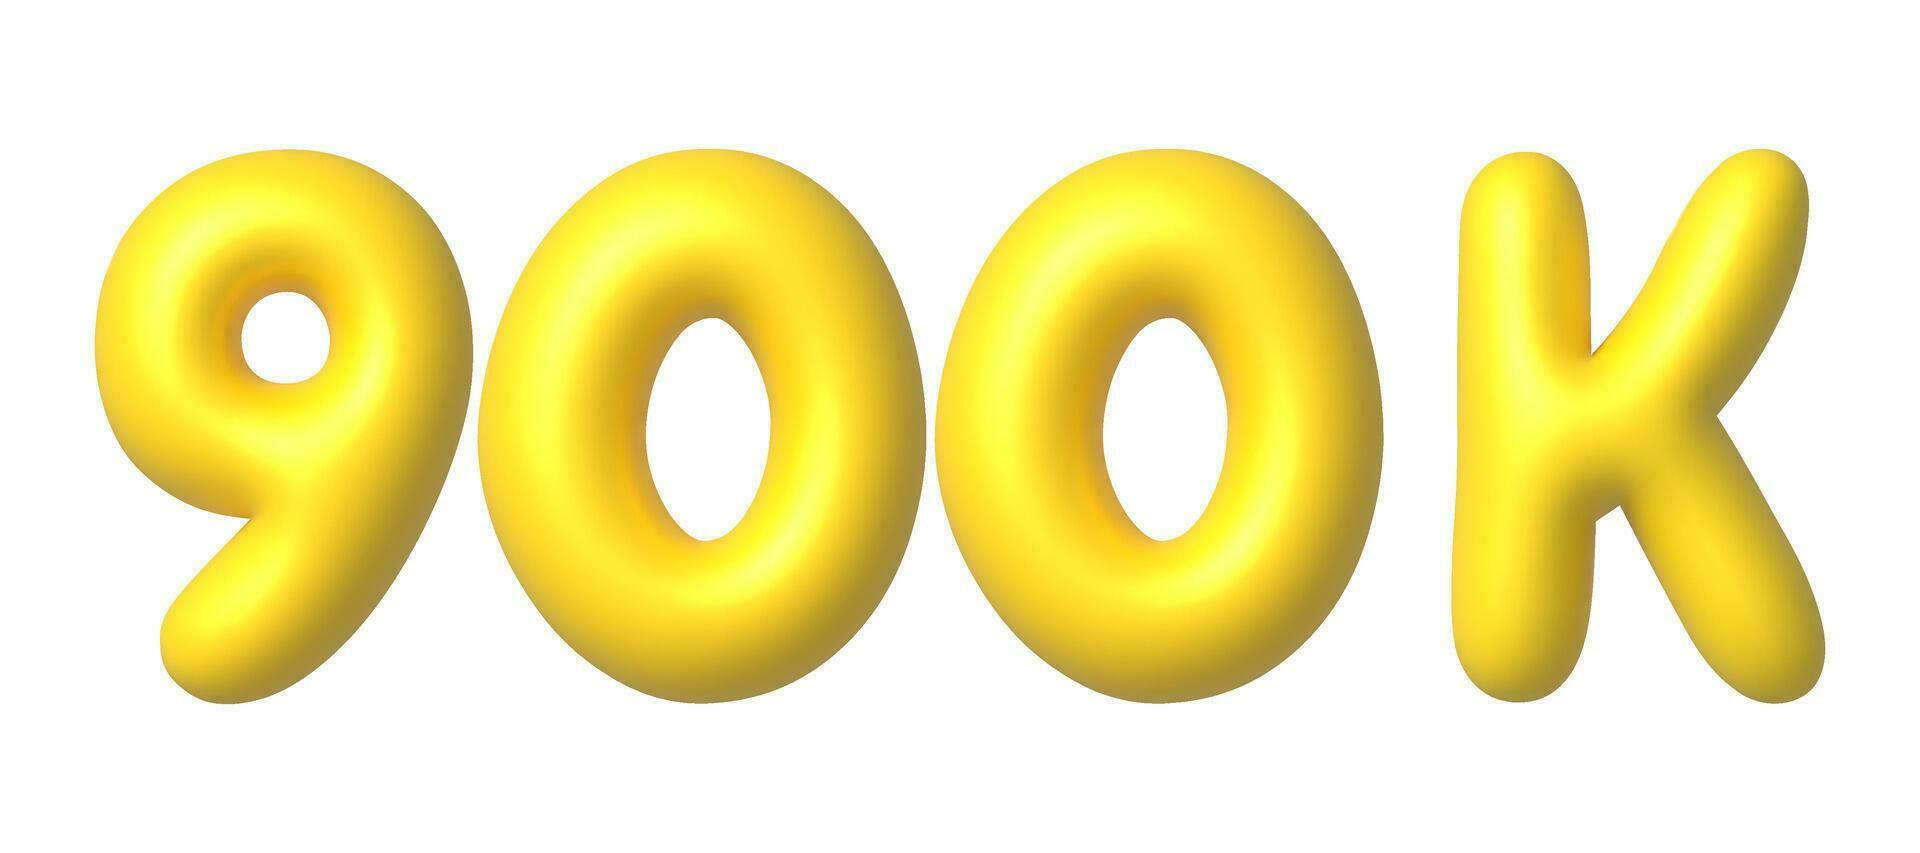 900k, 900,000 followers in social media. 3d gold vector design element in cartoon style.